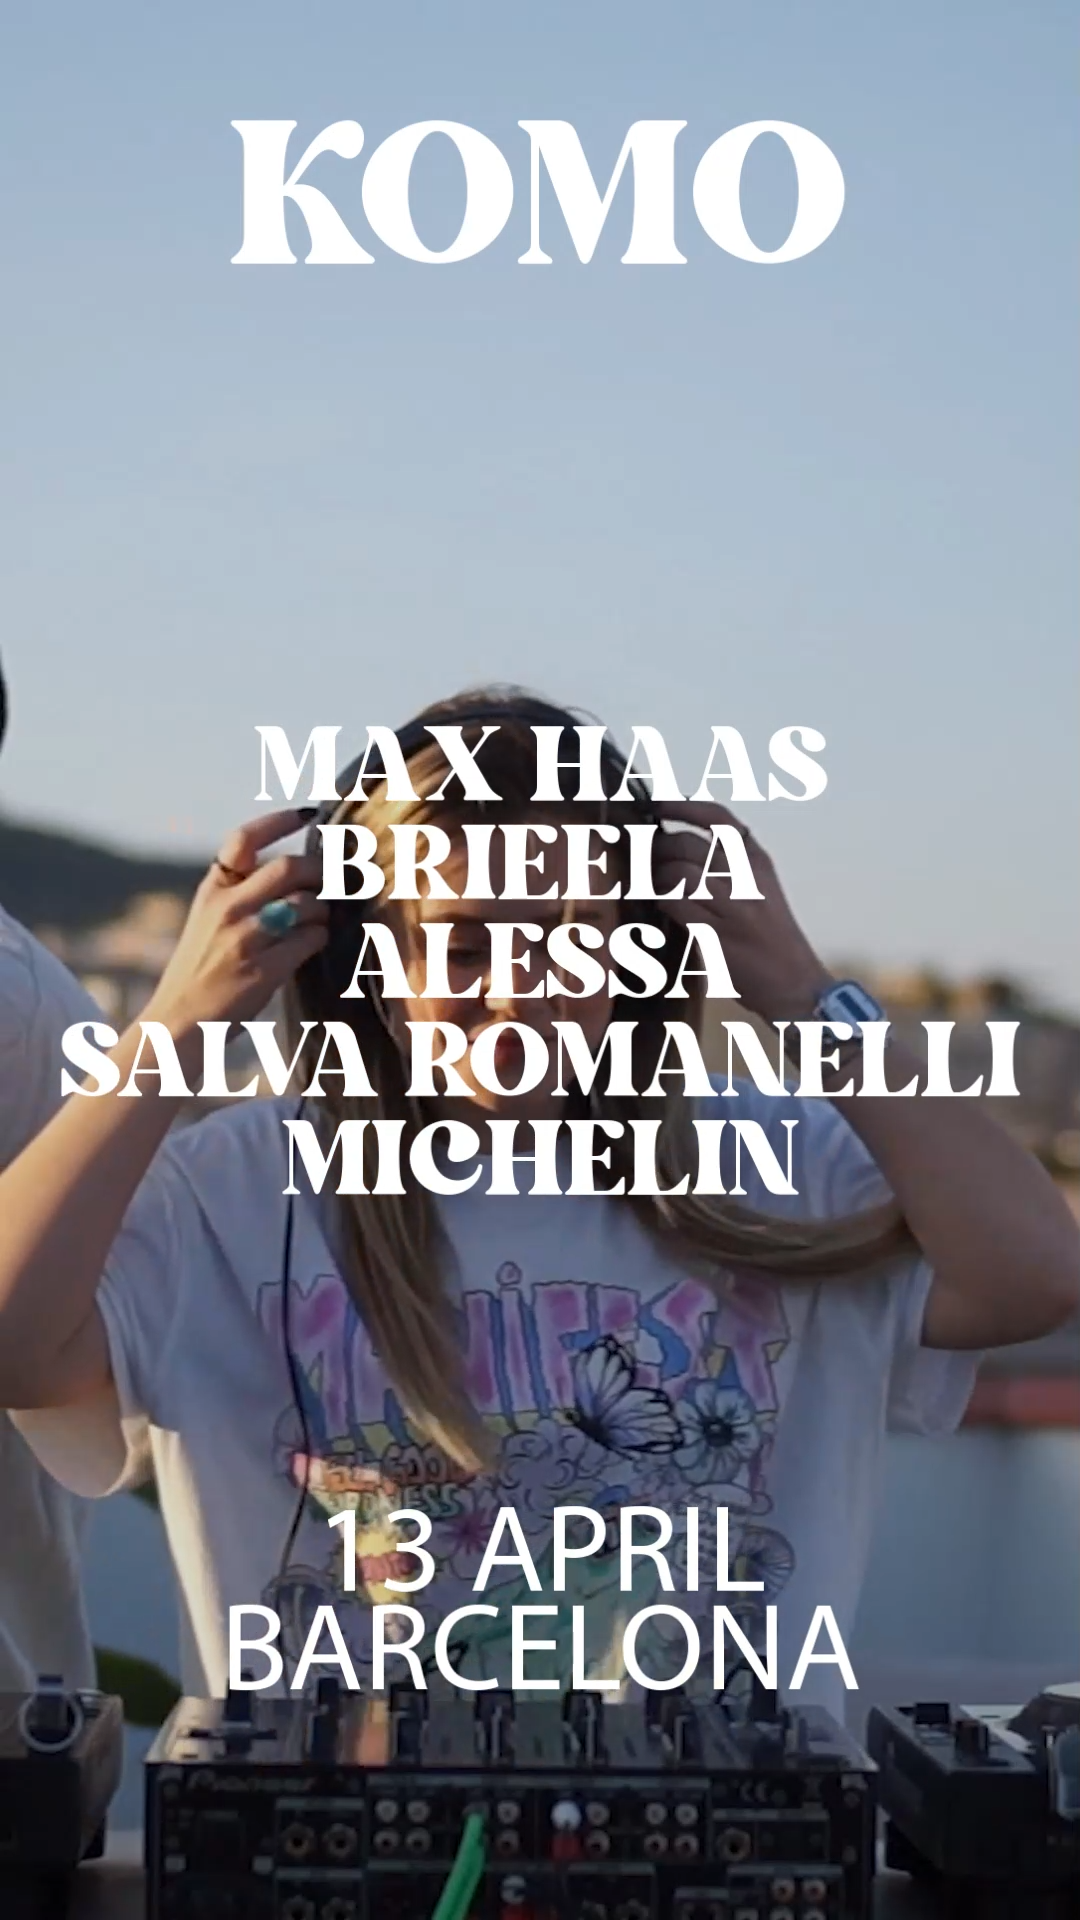 [CANCELLED] KOMO with Max Haas, Brieela, Alessa, Salva Romanelli, Michelin - フライヤー表